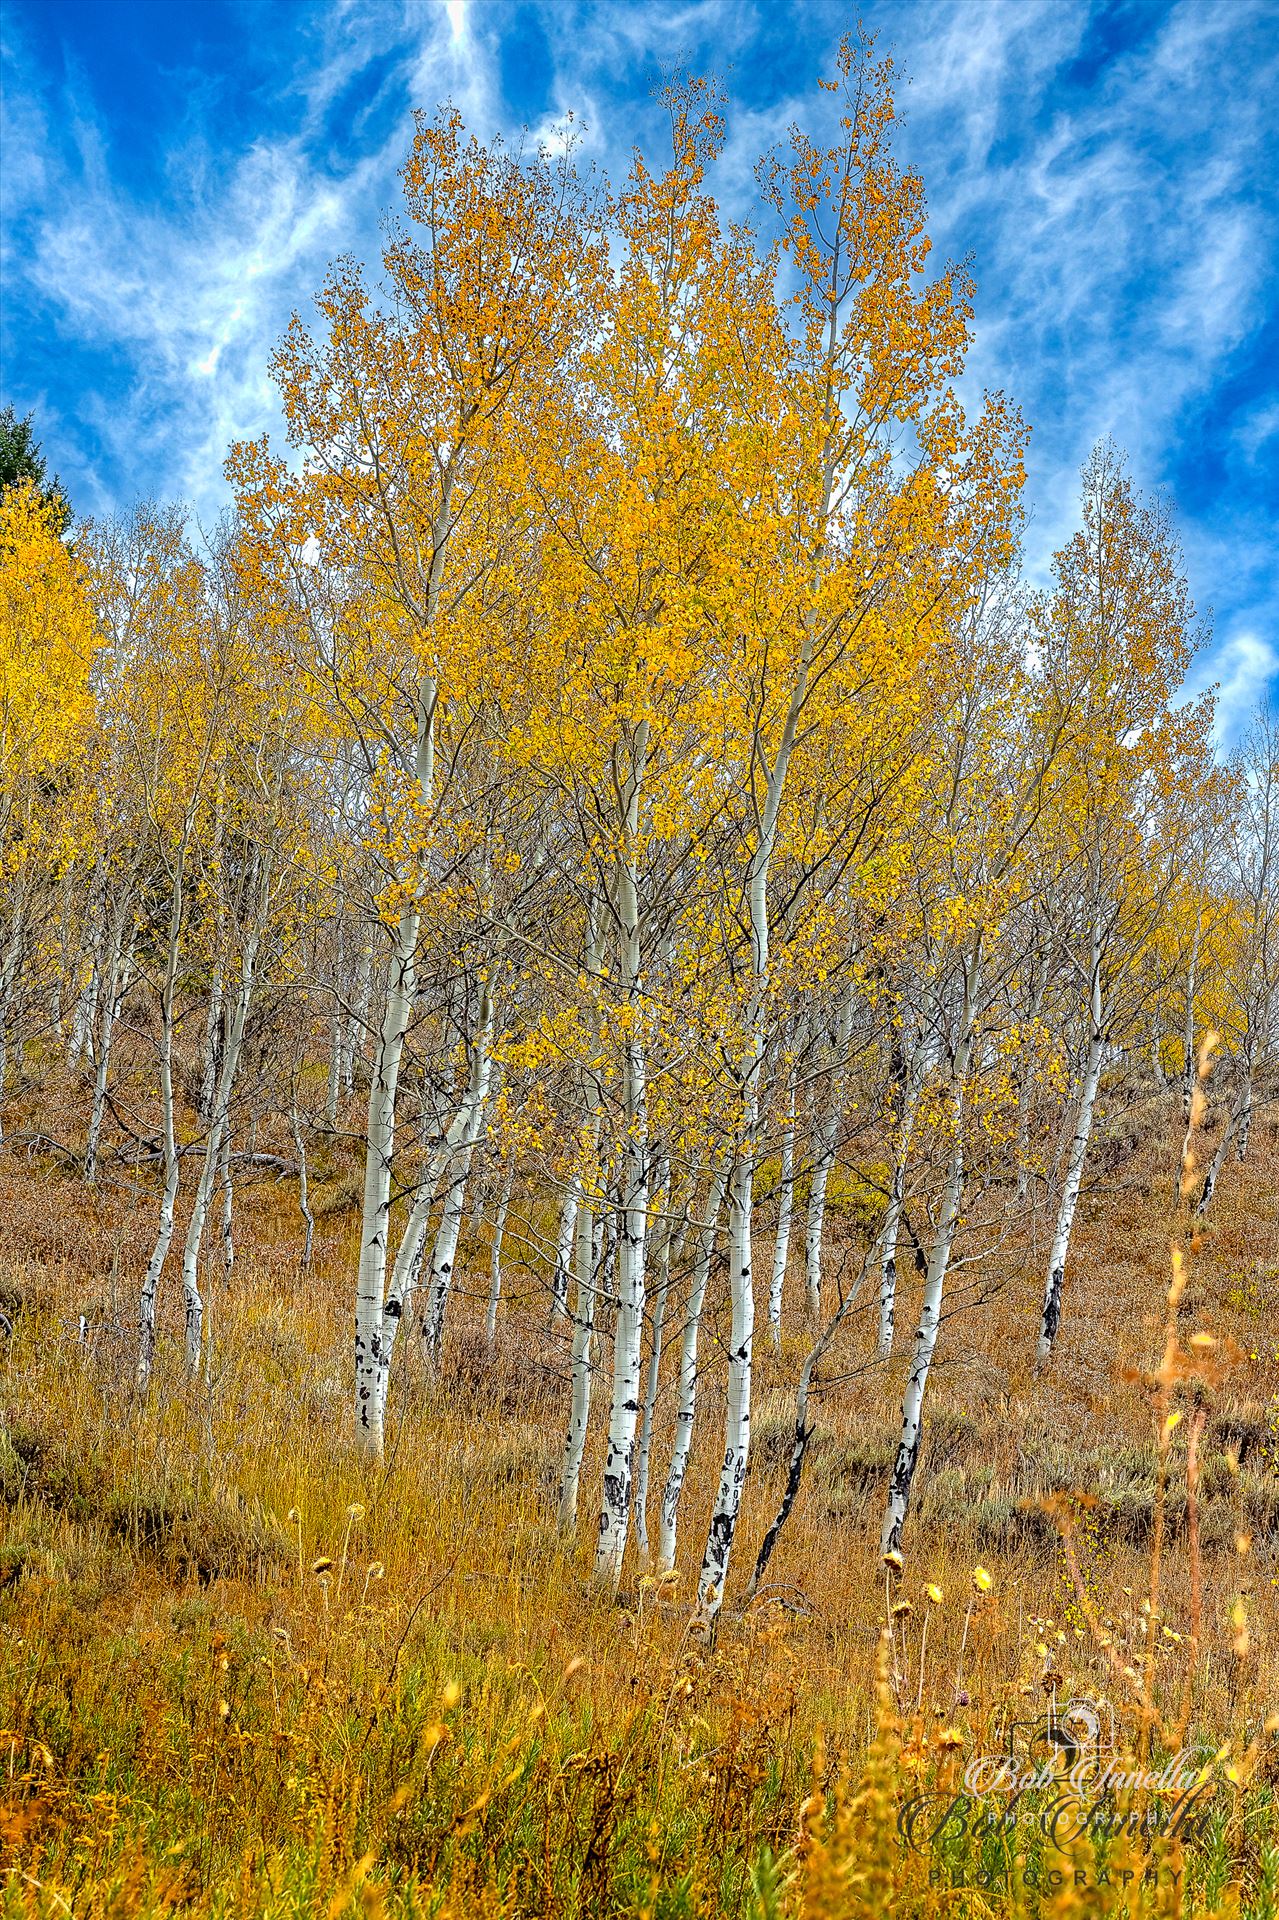 Aspens in Wyoming in October  by Buckmaster